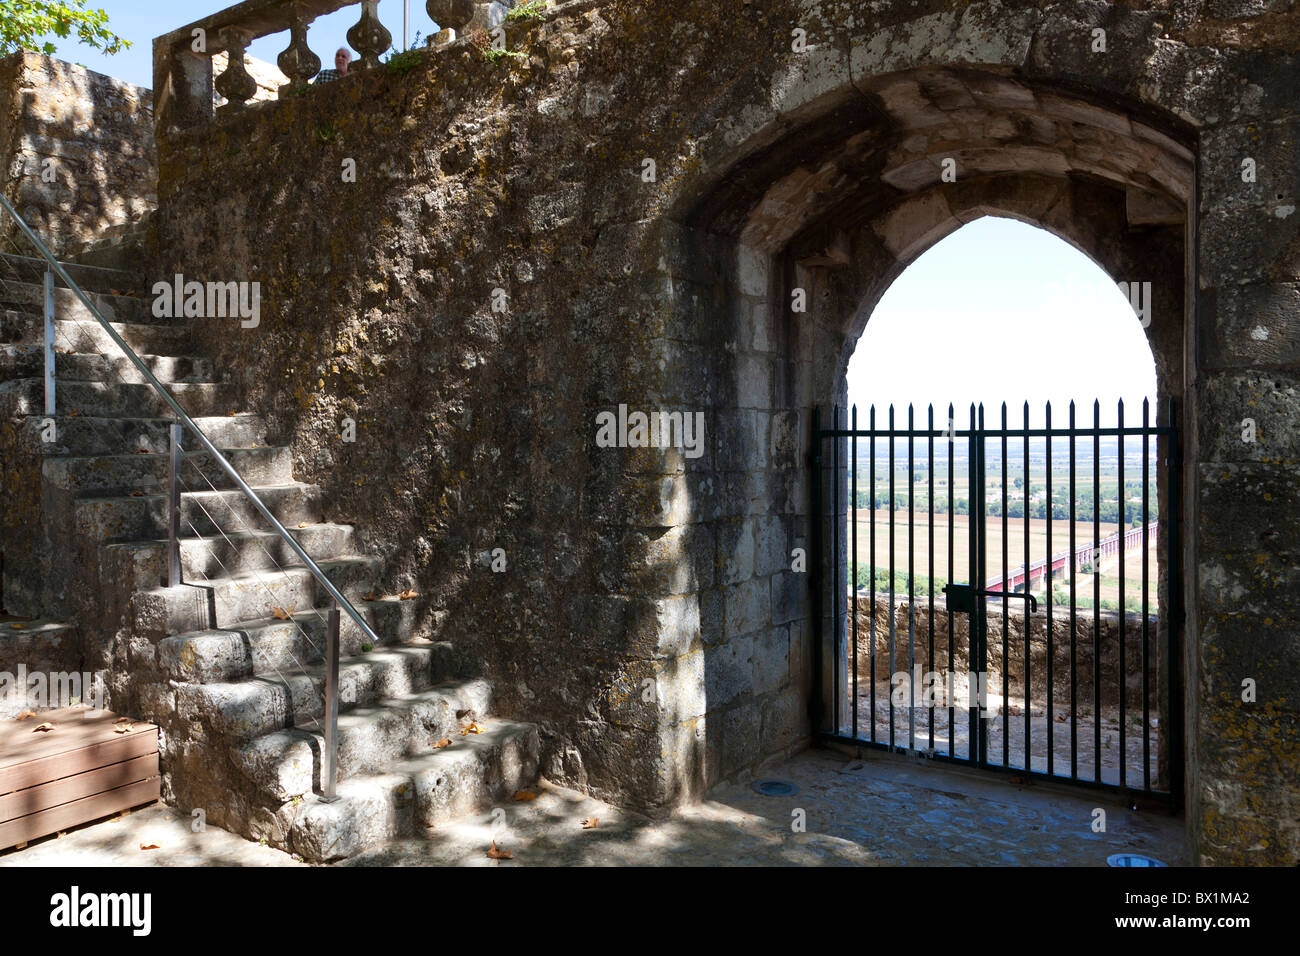 The Porta do Sol Gate in Portas do Sol Garden. Santarém, Portugal. Stock Photo